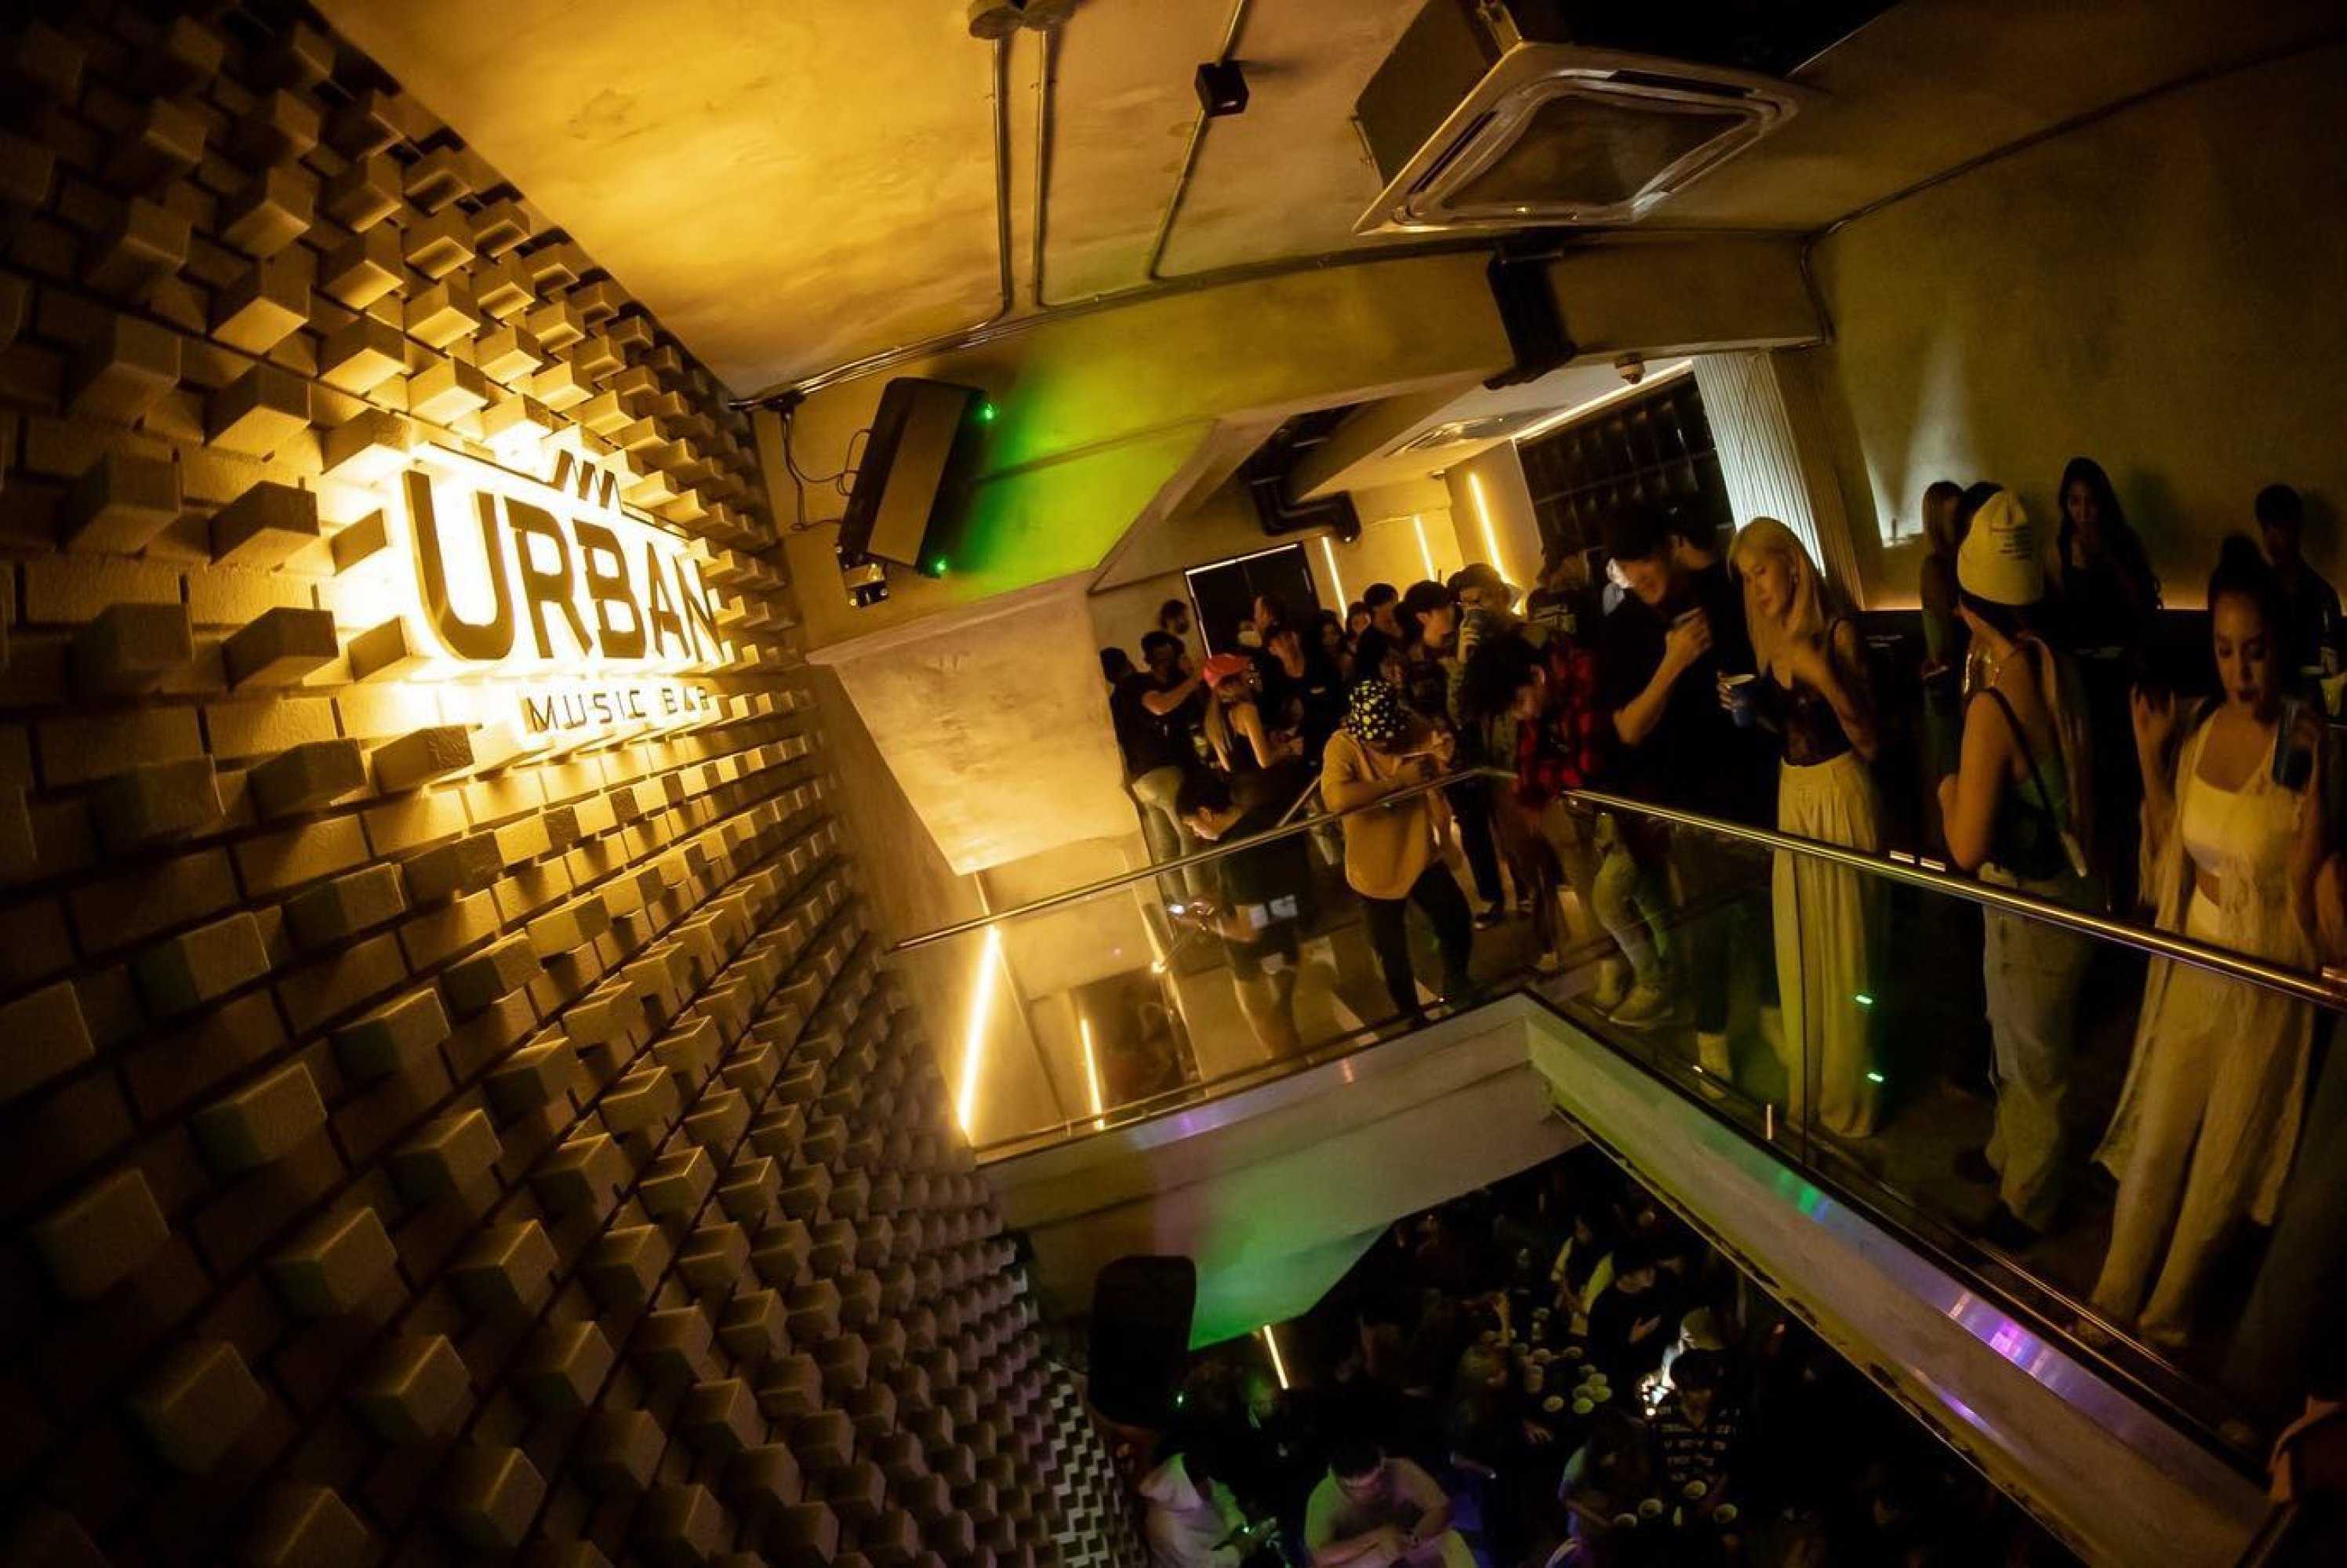 Urban Music Bar : Bangkok